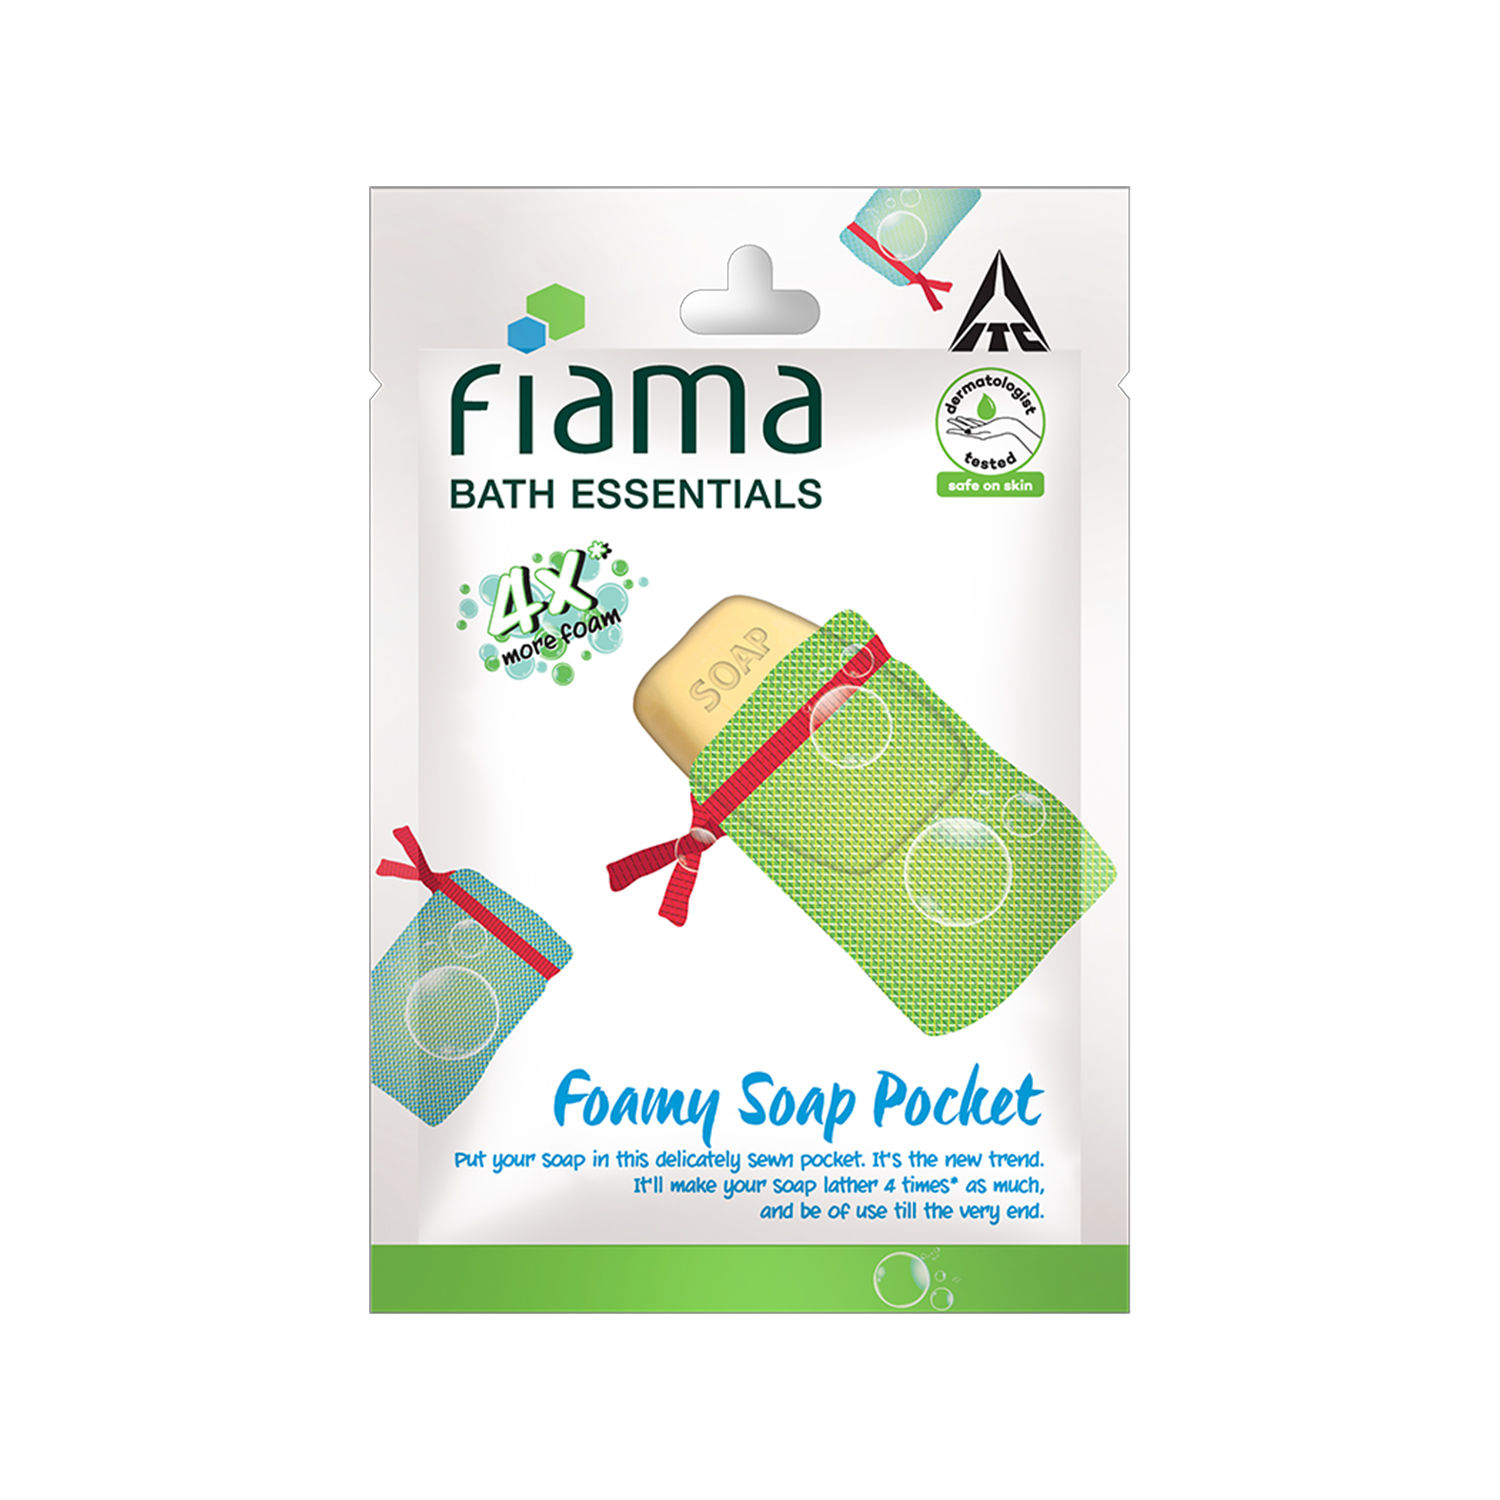 Fiama Bath Essentials Foamy Soap Pocket